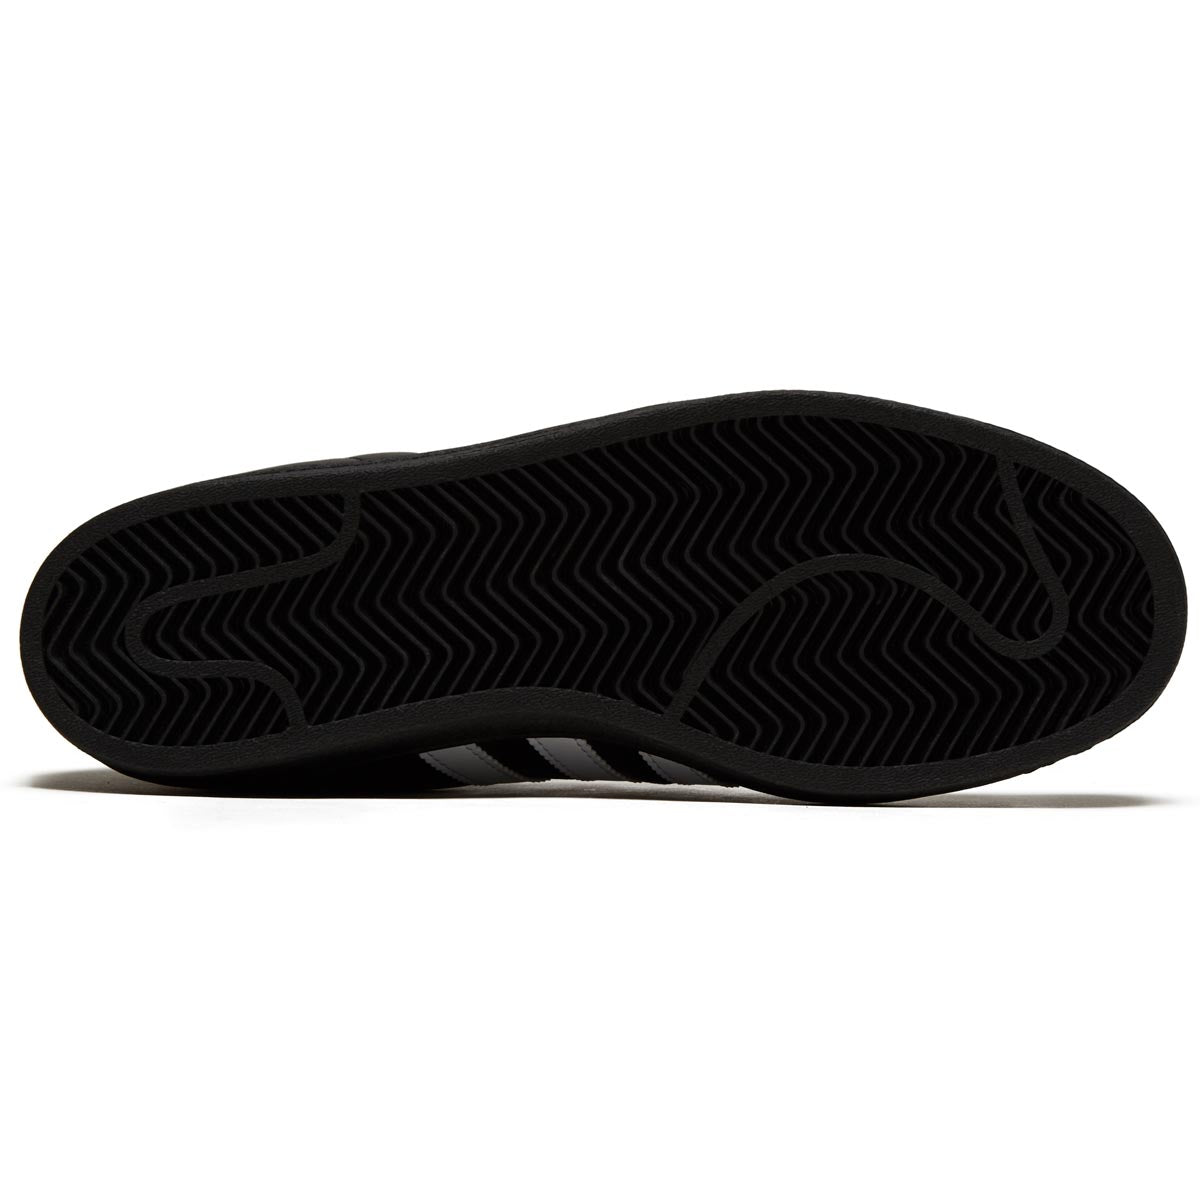 Adidas Pro Model ADV Shoes - Black/White/Gold Metallic image 4